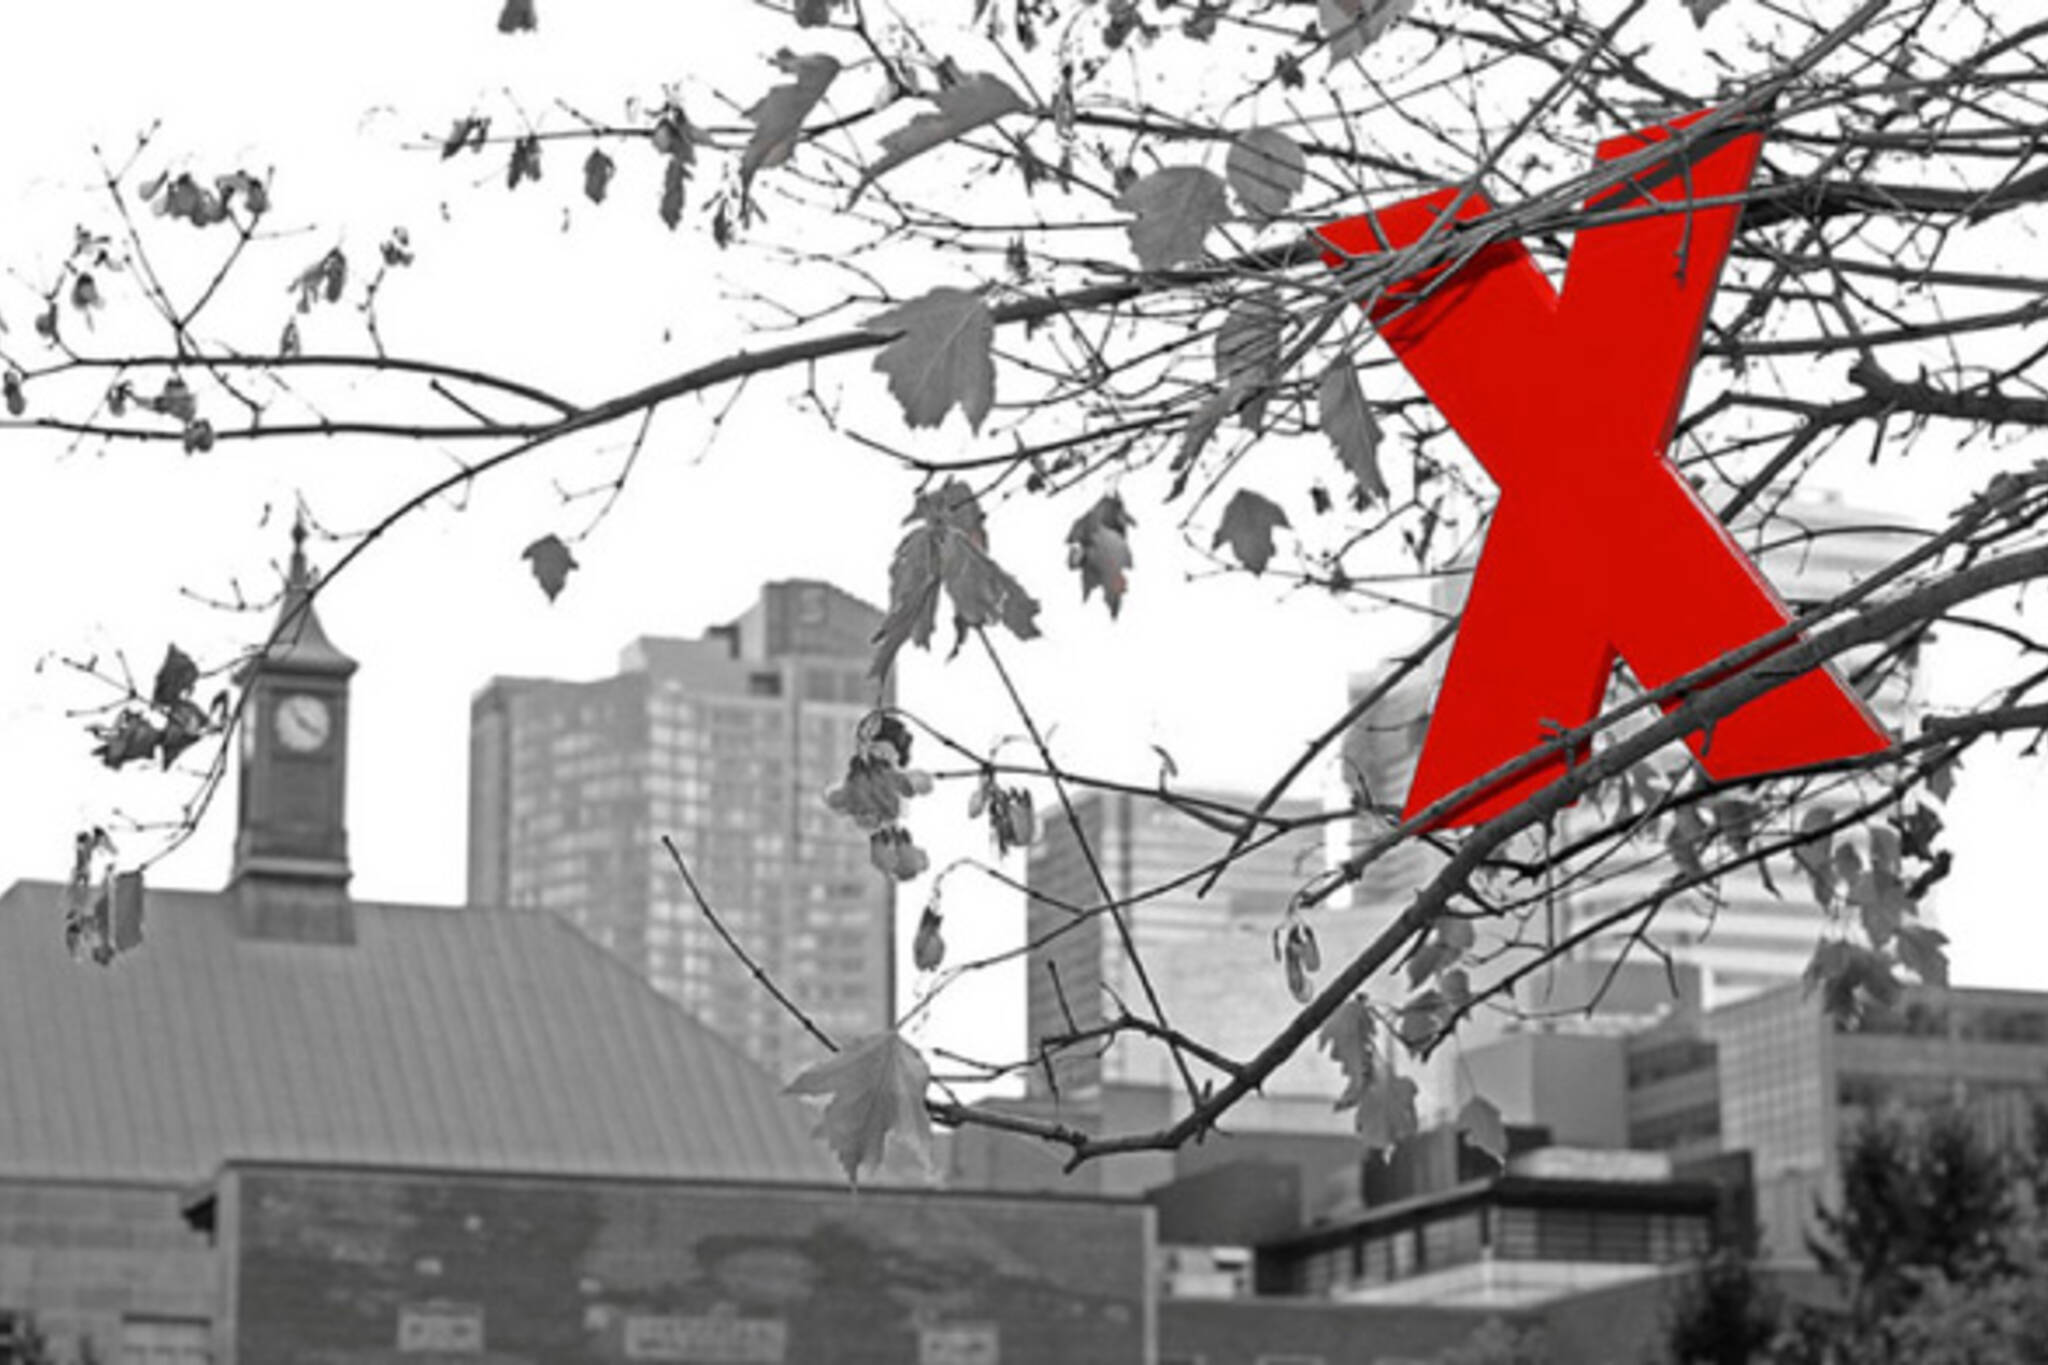 TEDx Ryerson UofT